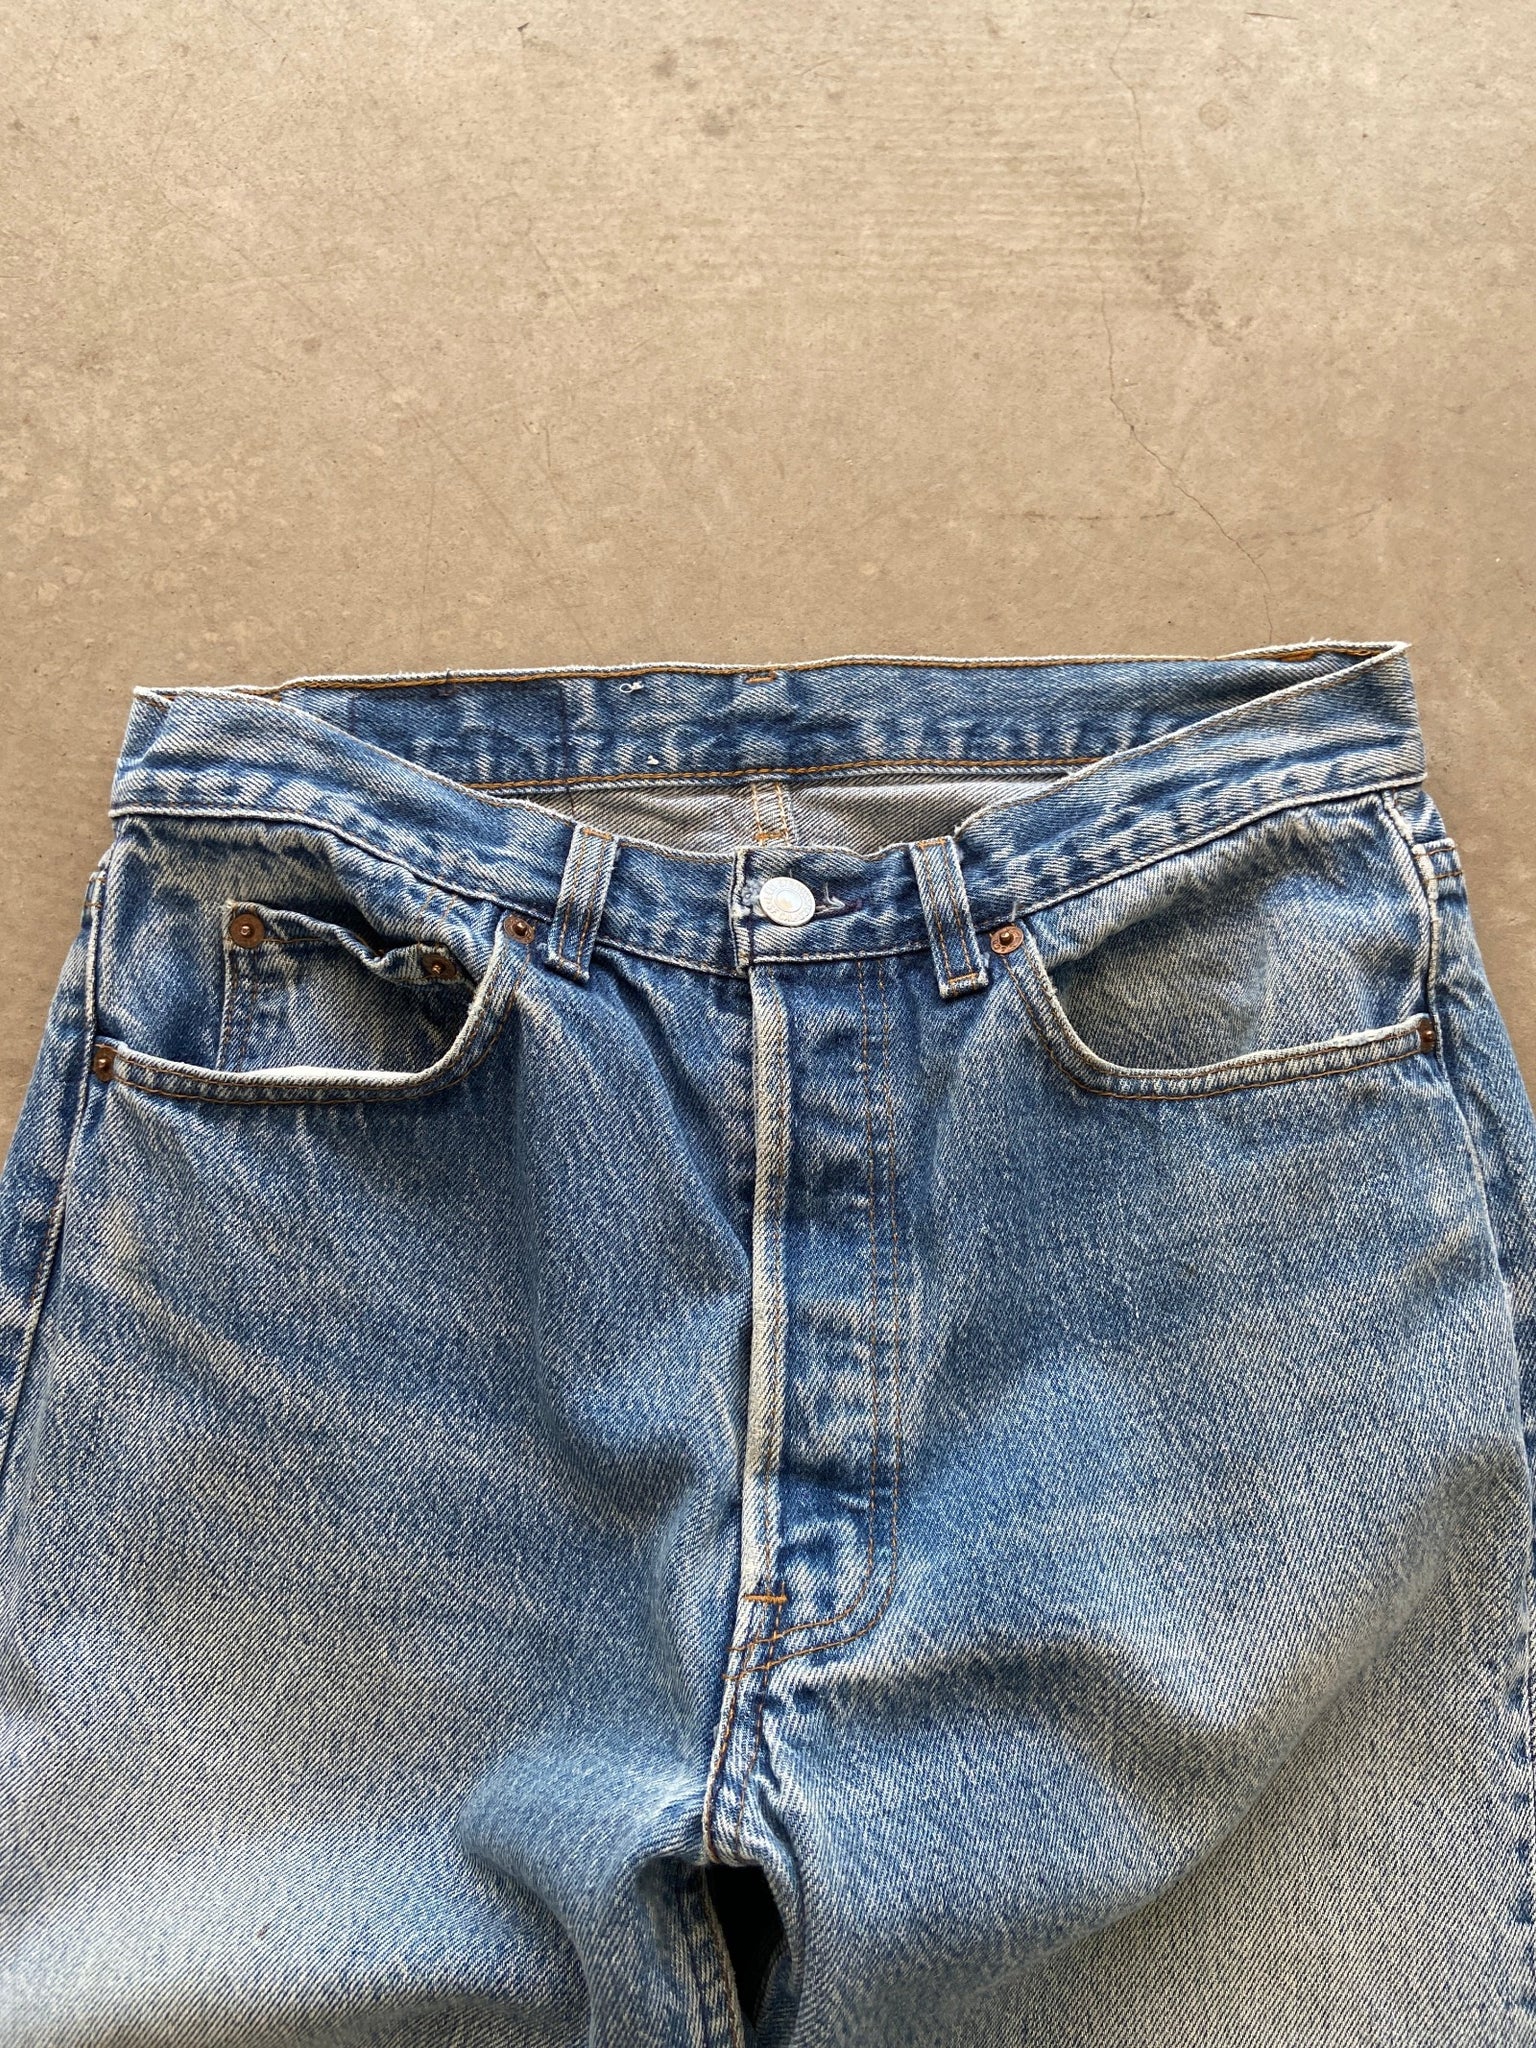 1990's Levi's 501 Jeans - 31 x 32